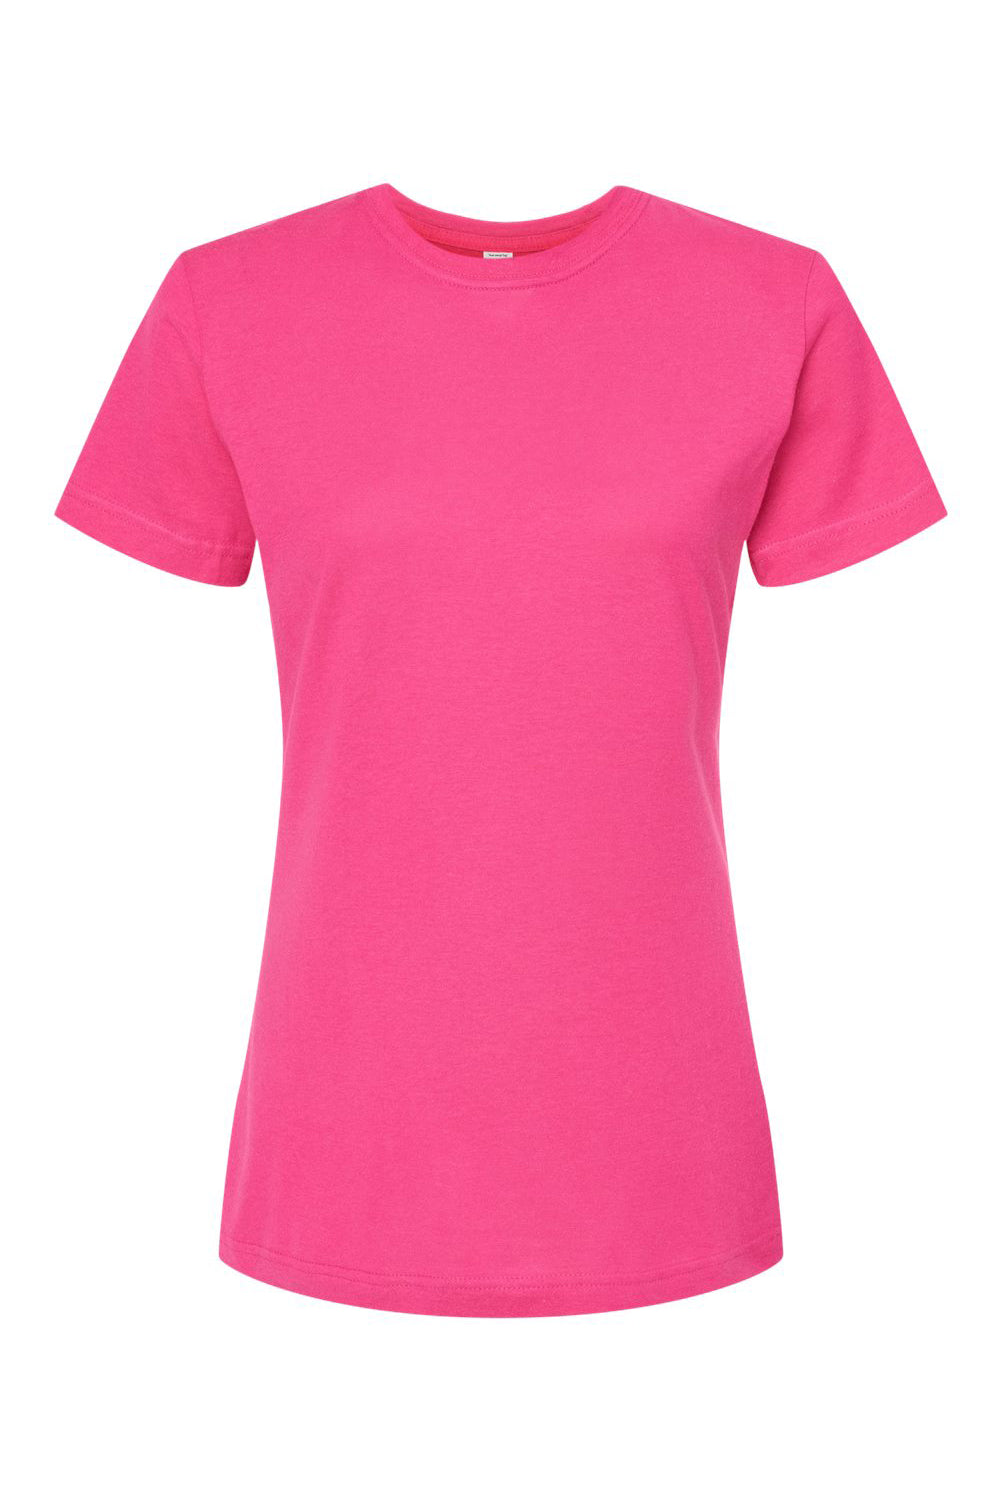 Tultex 216 Womens Fine Jersey Classic Fit Short Sleeve Crewneck T-Shirt Fuchsia Pink Flat Front